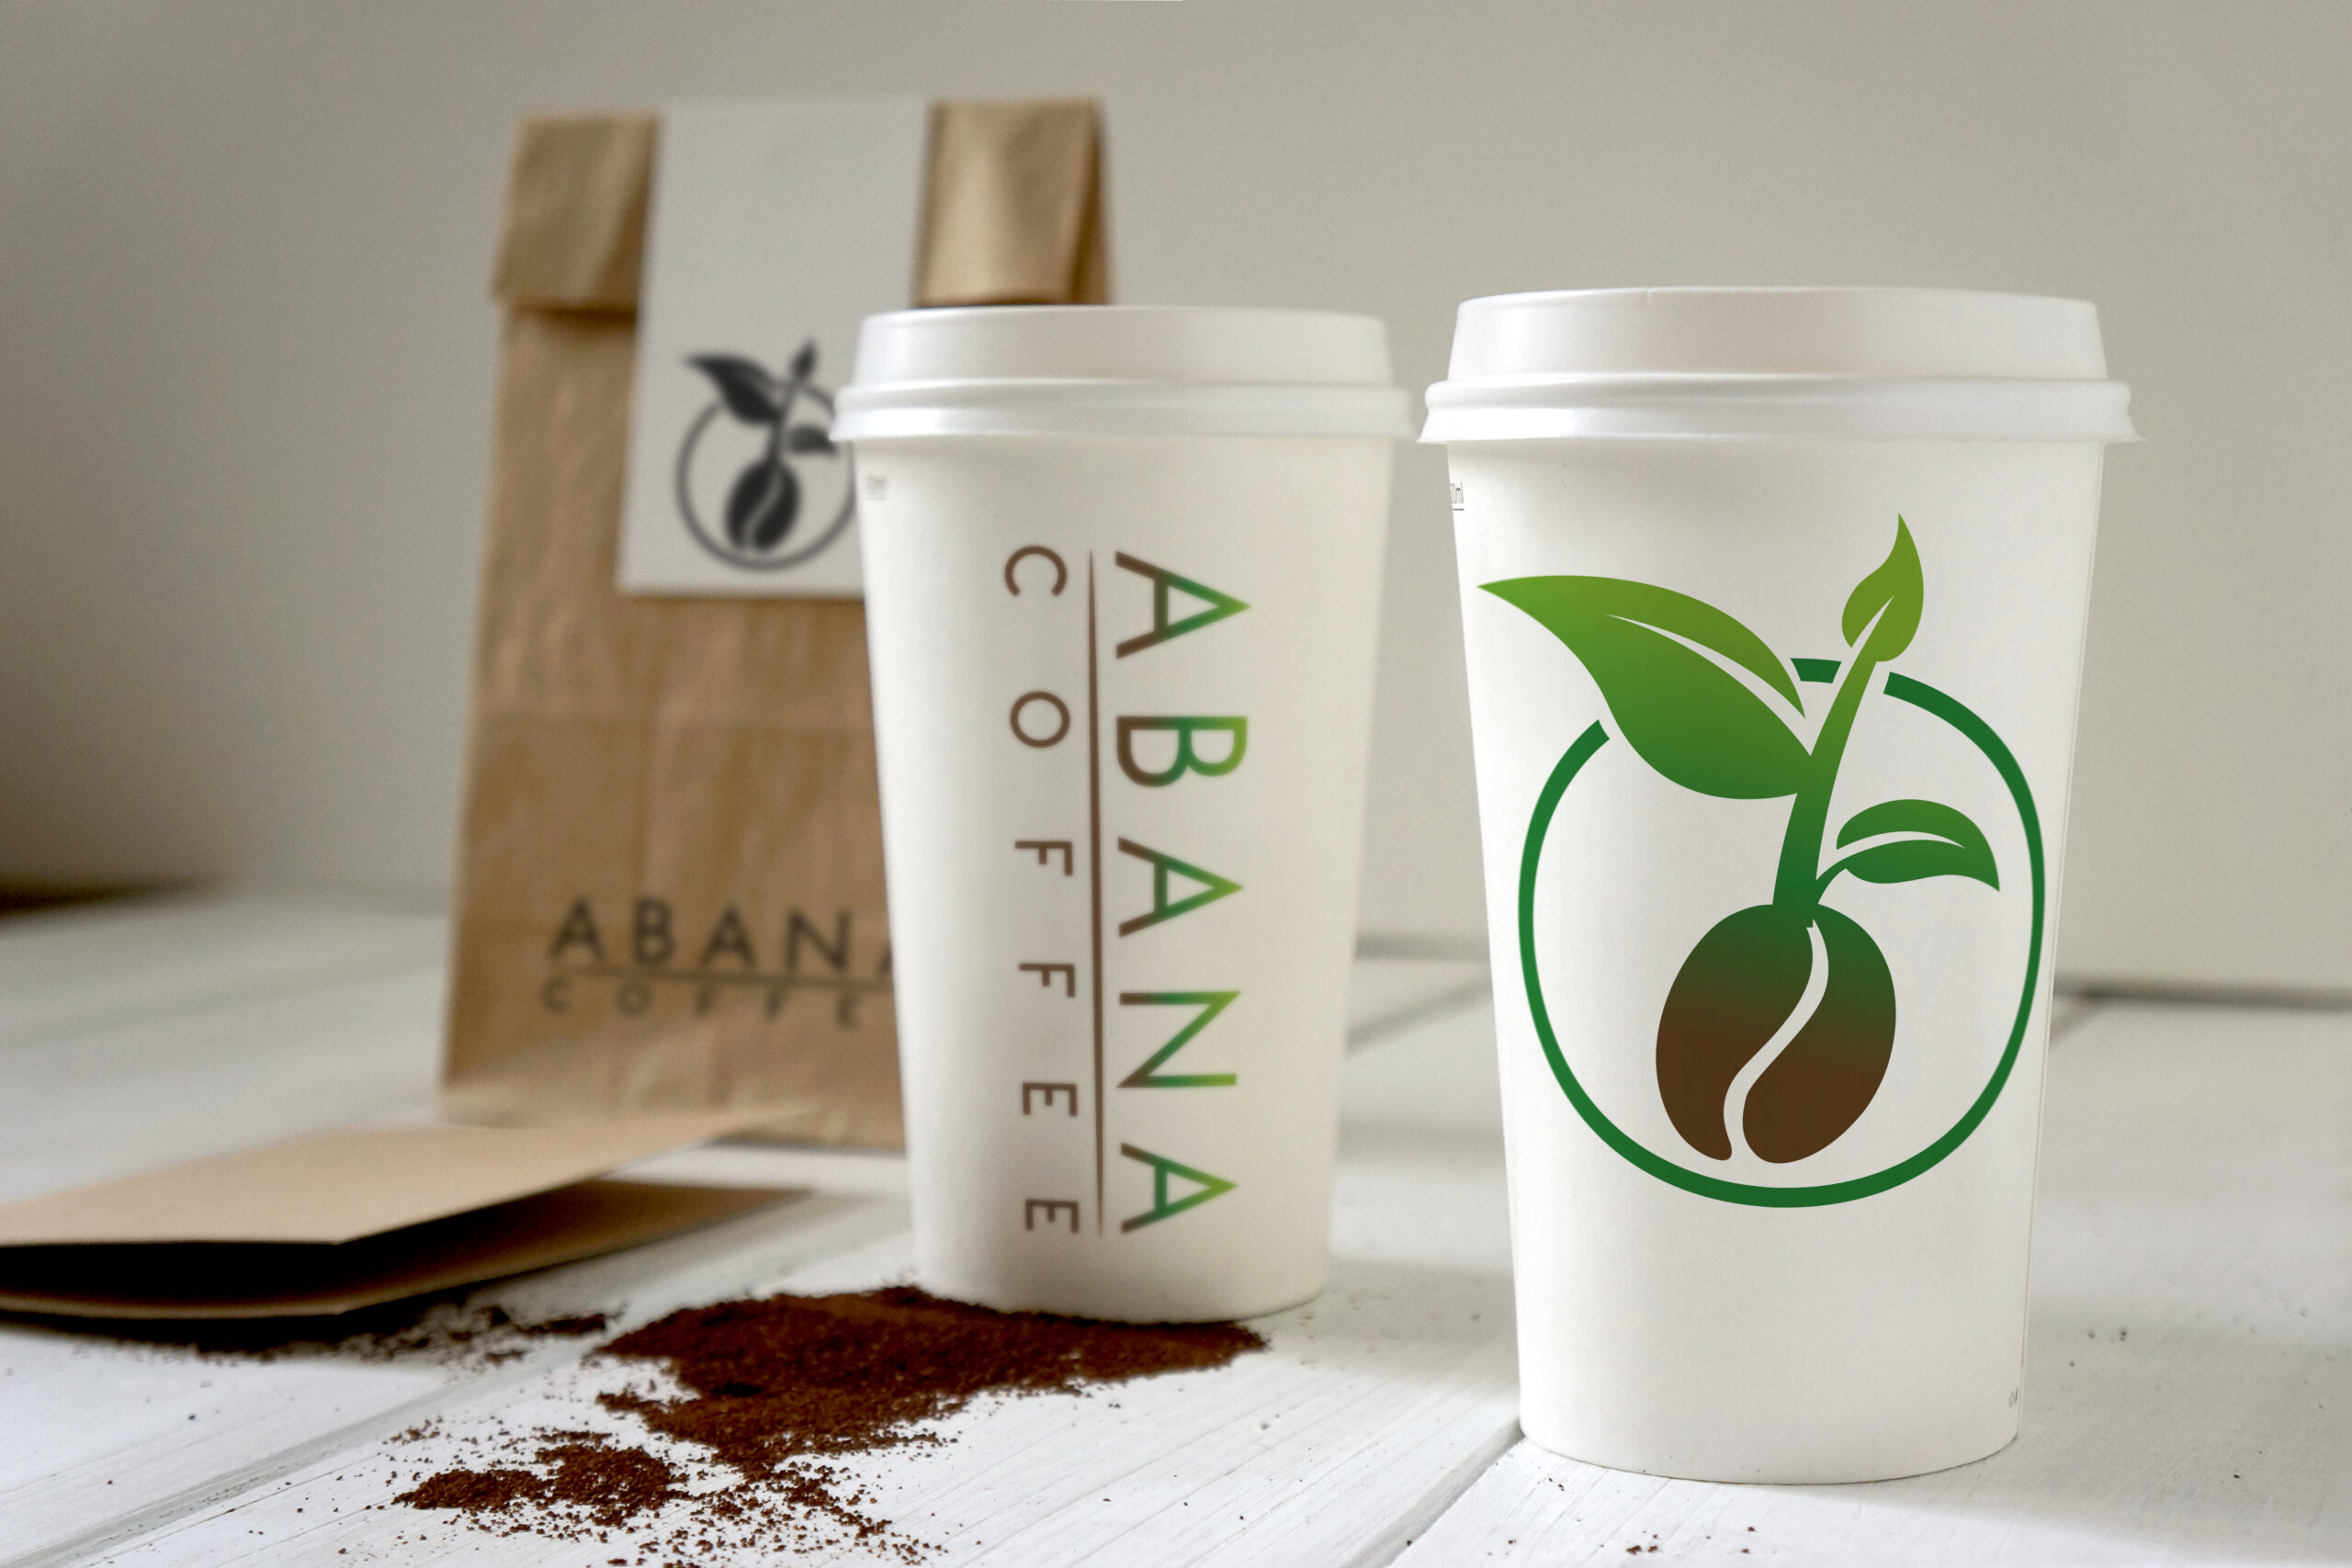 Abana Coffee Branding, Package and Website